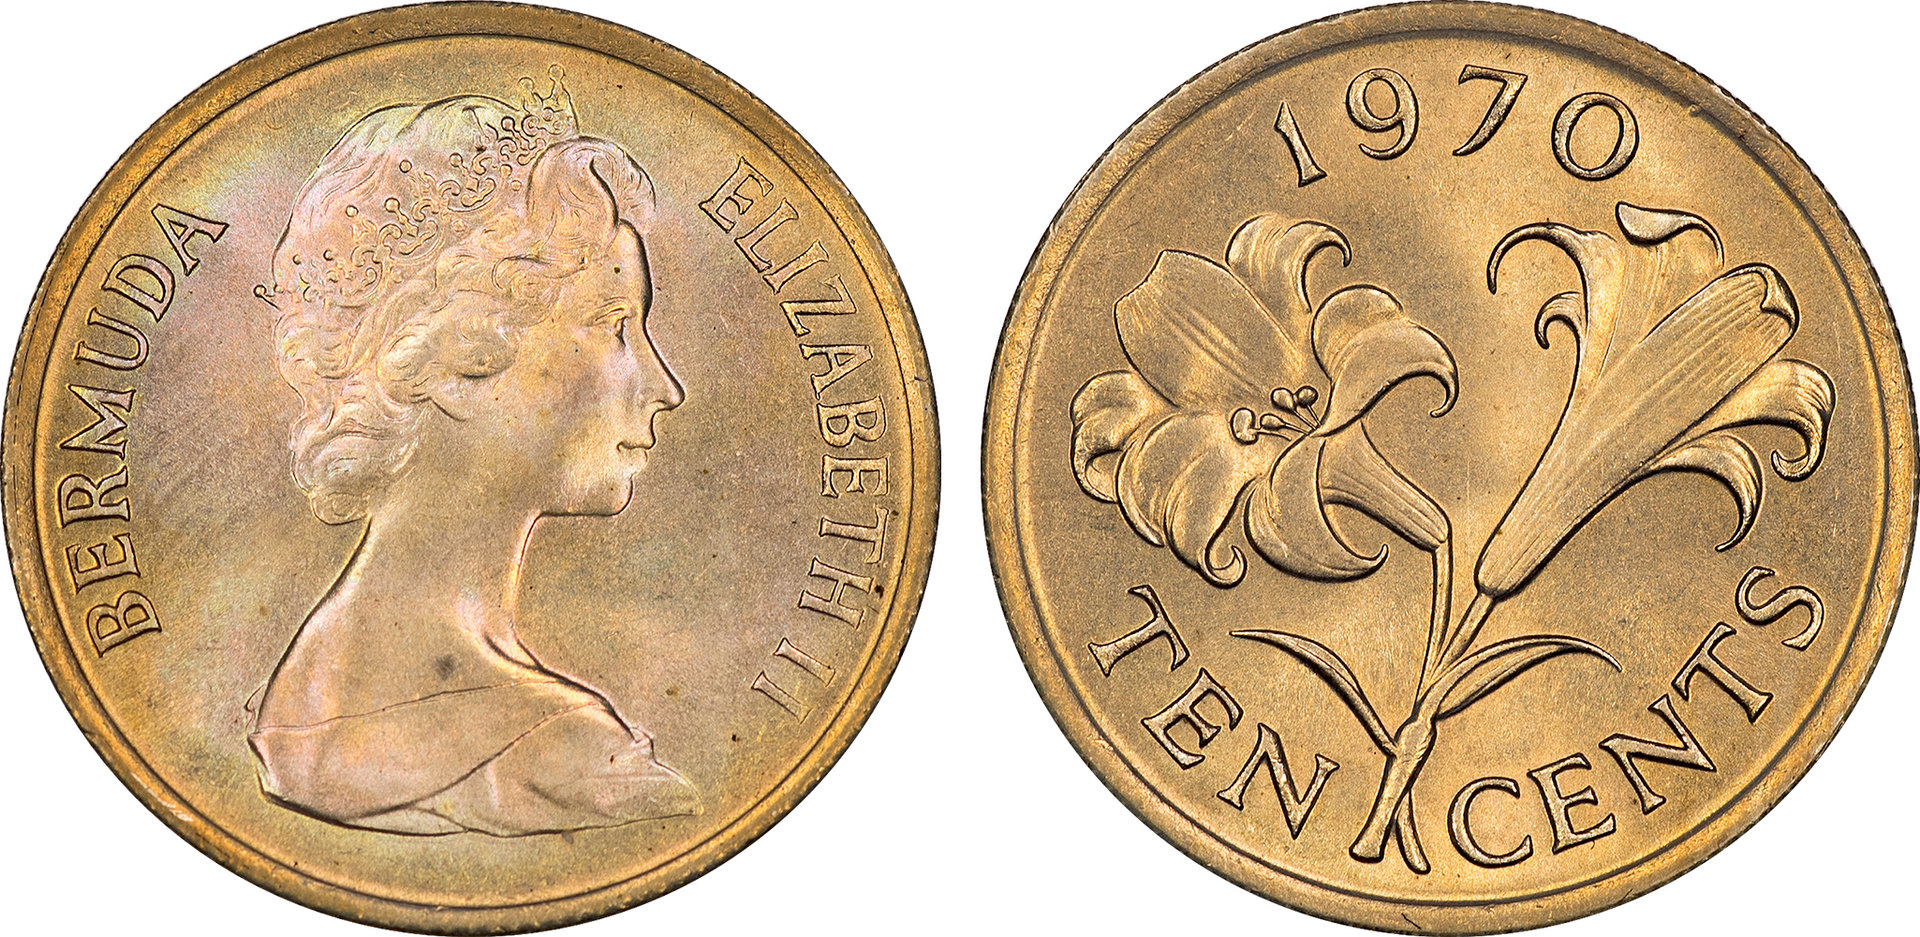 Bermuda - 1970 10 Cents.jpg